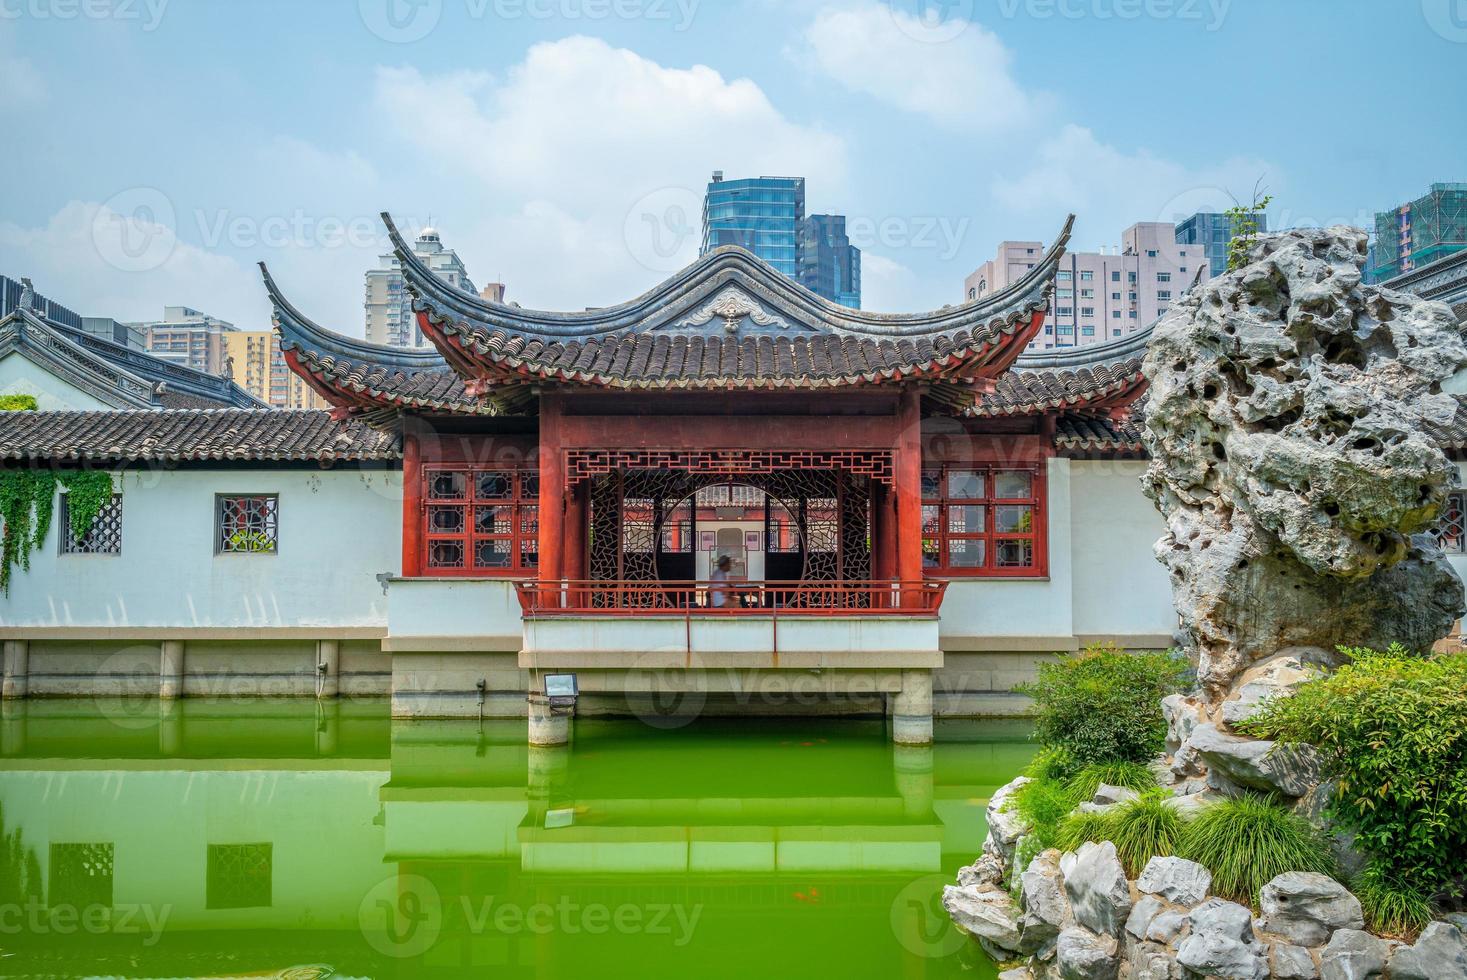 wen miao, konfuzianischer tempel, in shanghai, china foto